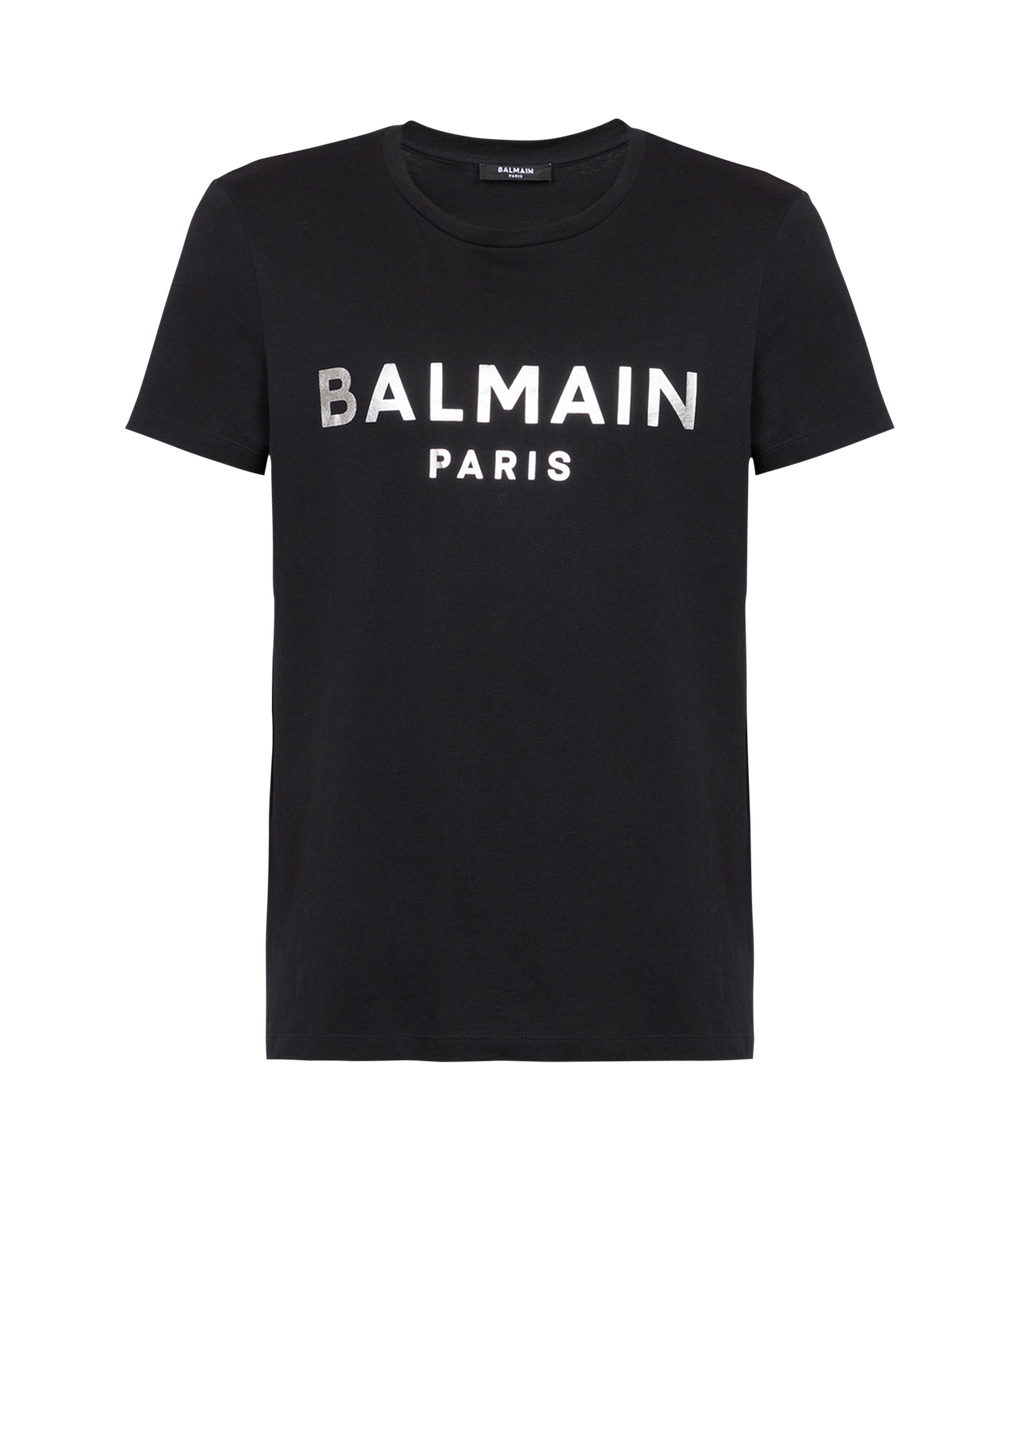 Balmain Paris 로고 프린트 디테일 코튼 티셔츠, 은색, hi-res